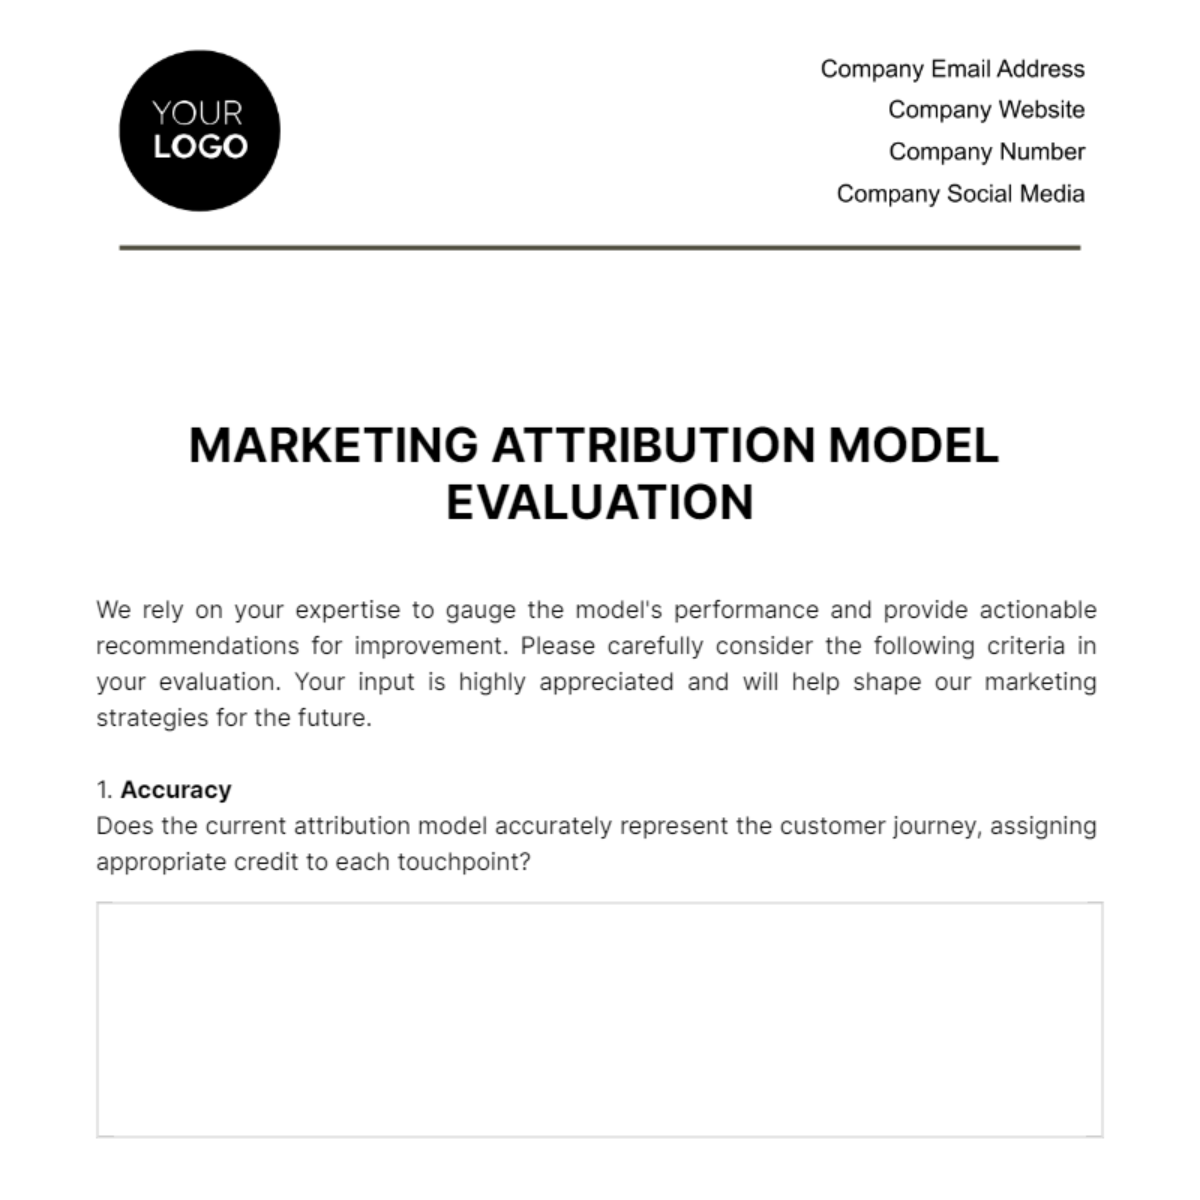 Marketing Attribution Model Evaluation Template